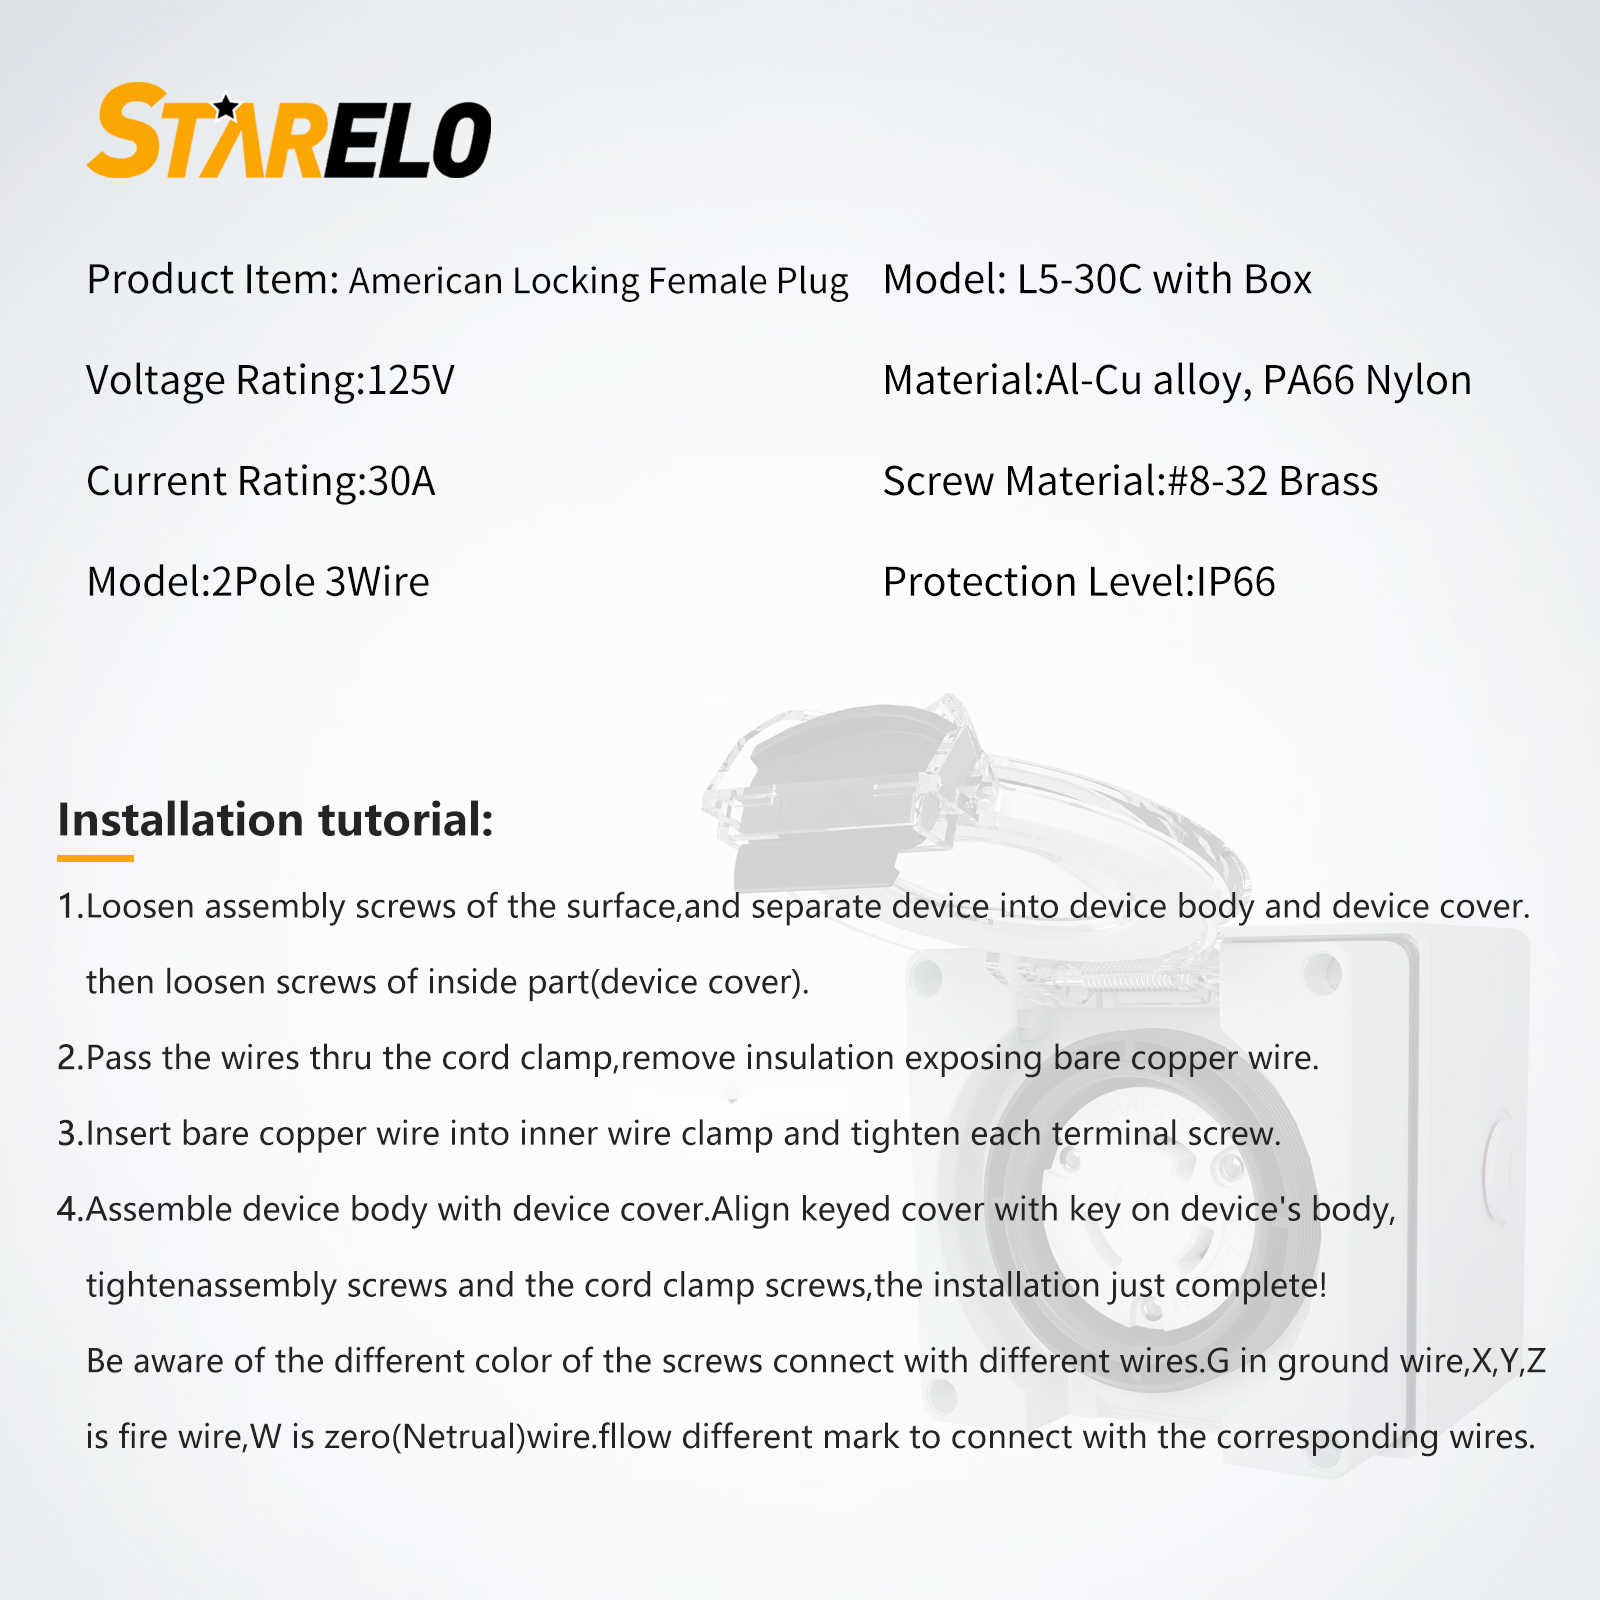 NEMA L5-30C 30Amp Locking Female Plug Box specification and installation tutorials